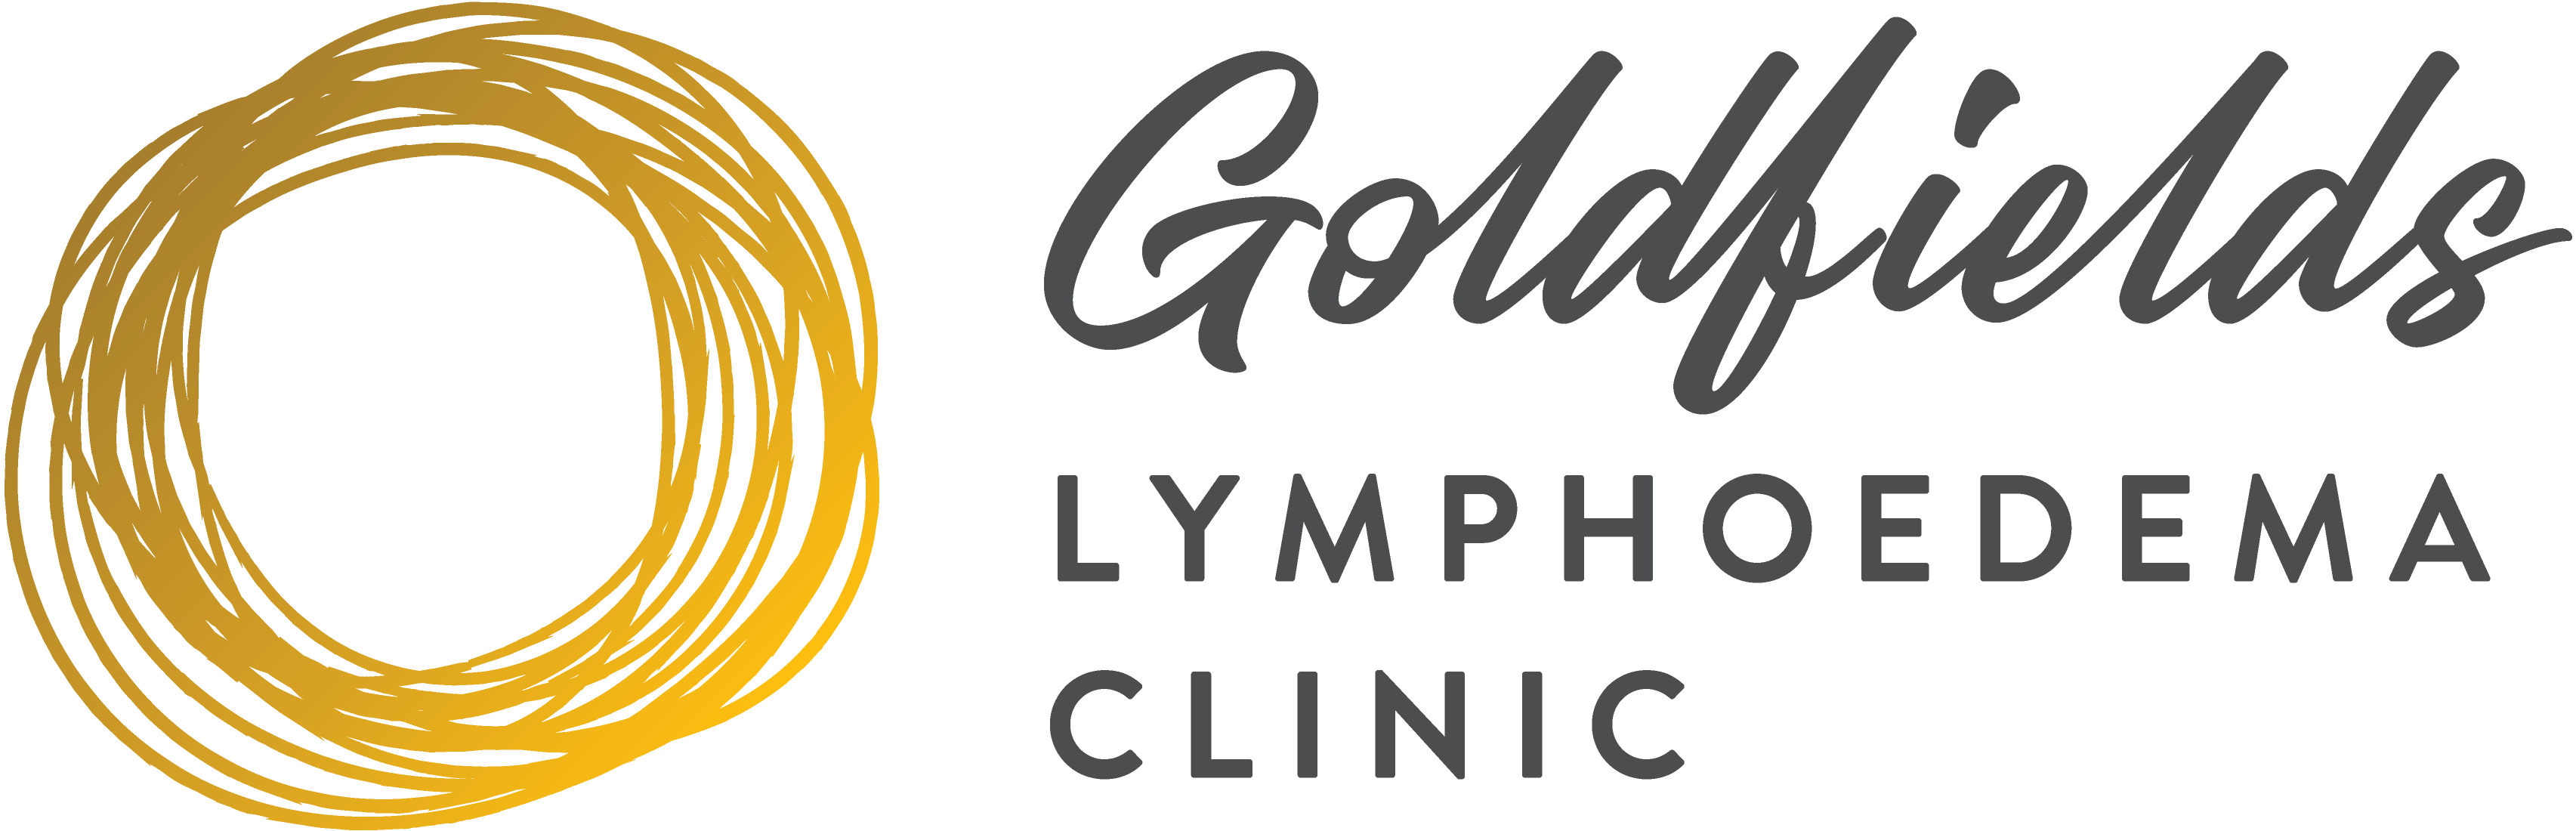 Goldfields Lymphoedema Clinic